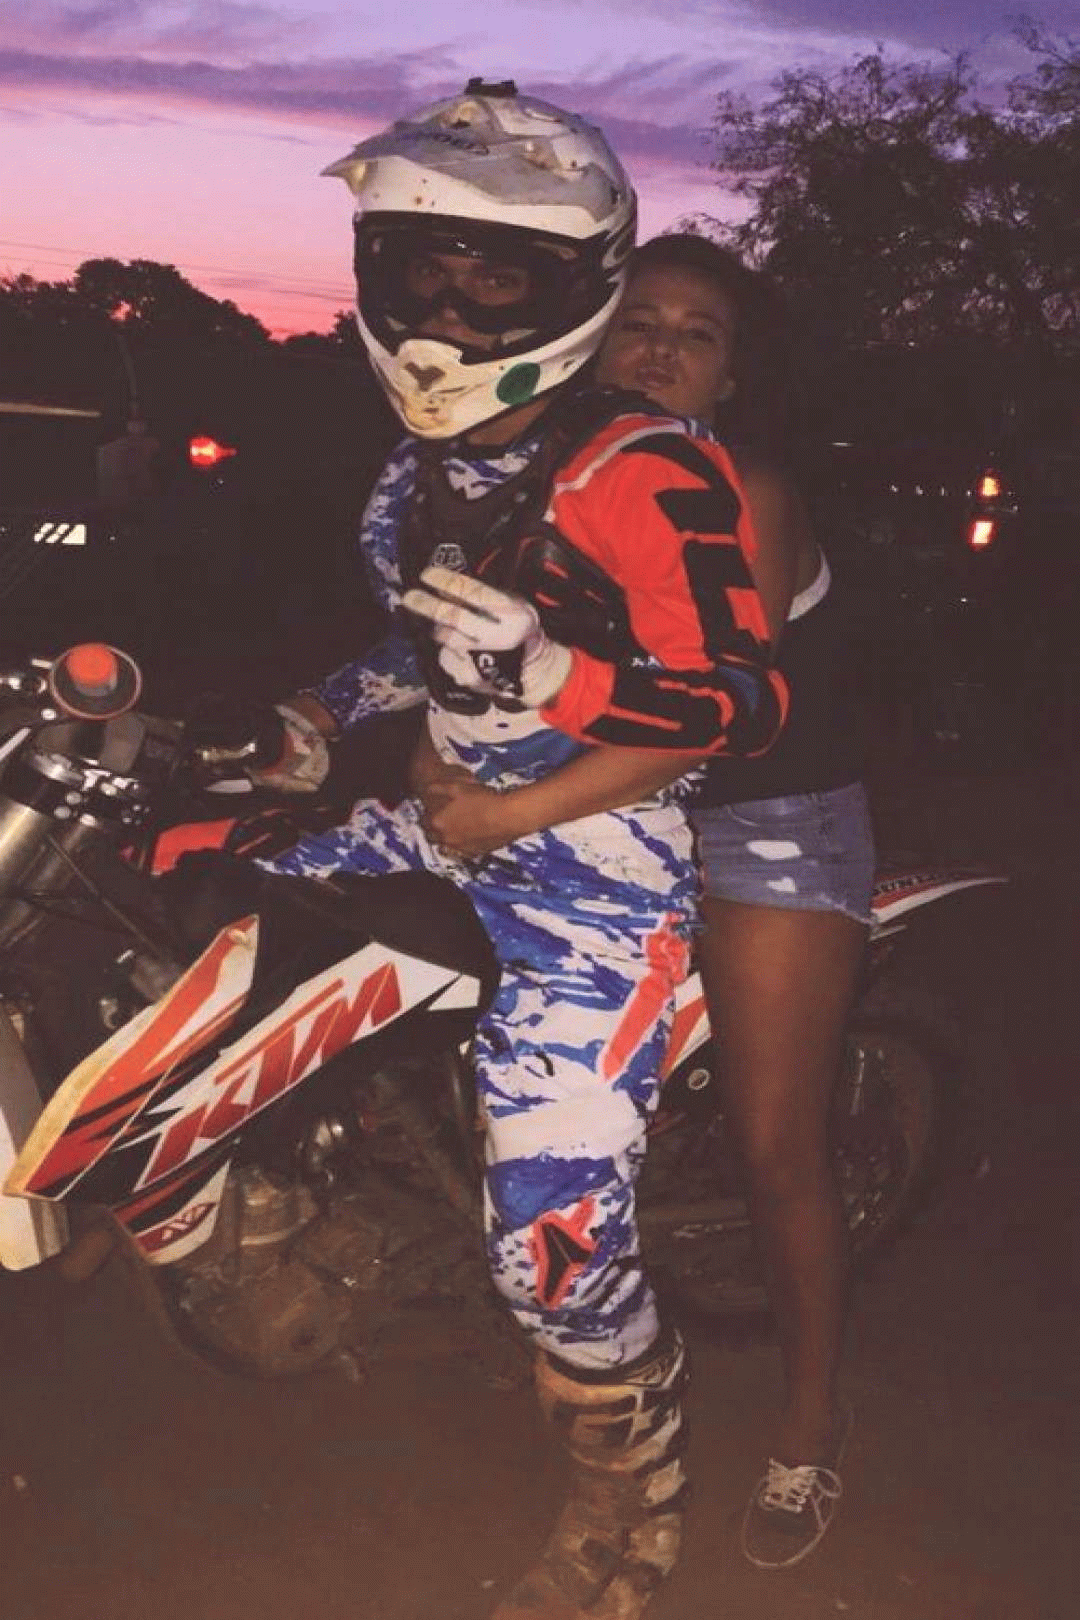 boy hot and motocross bild in 2020 relationship goals